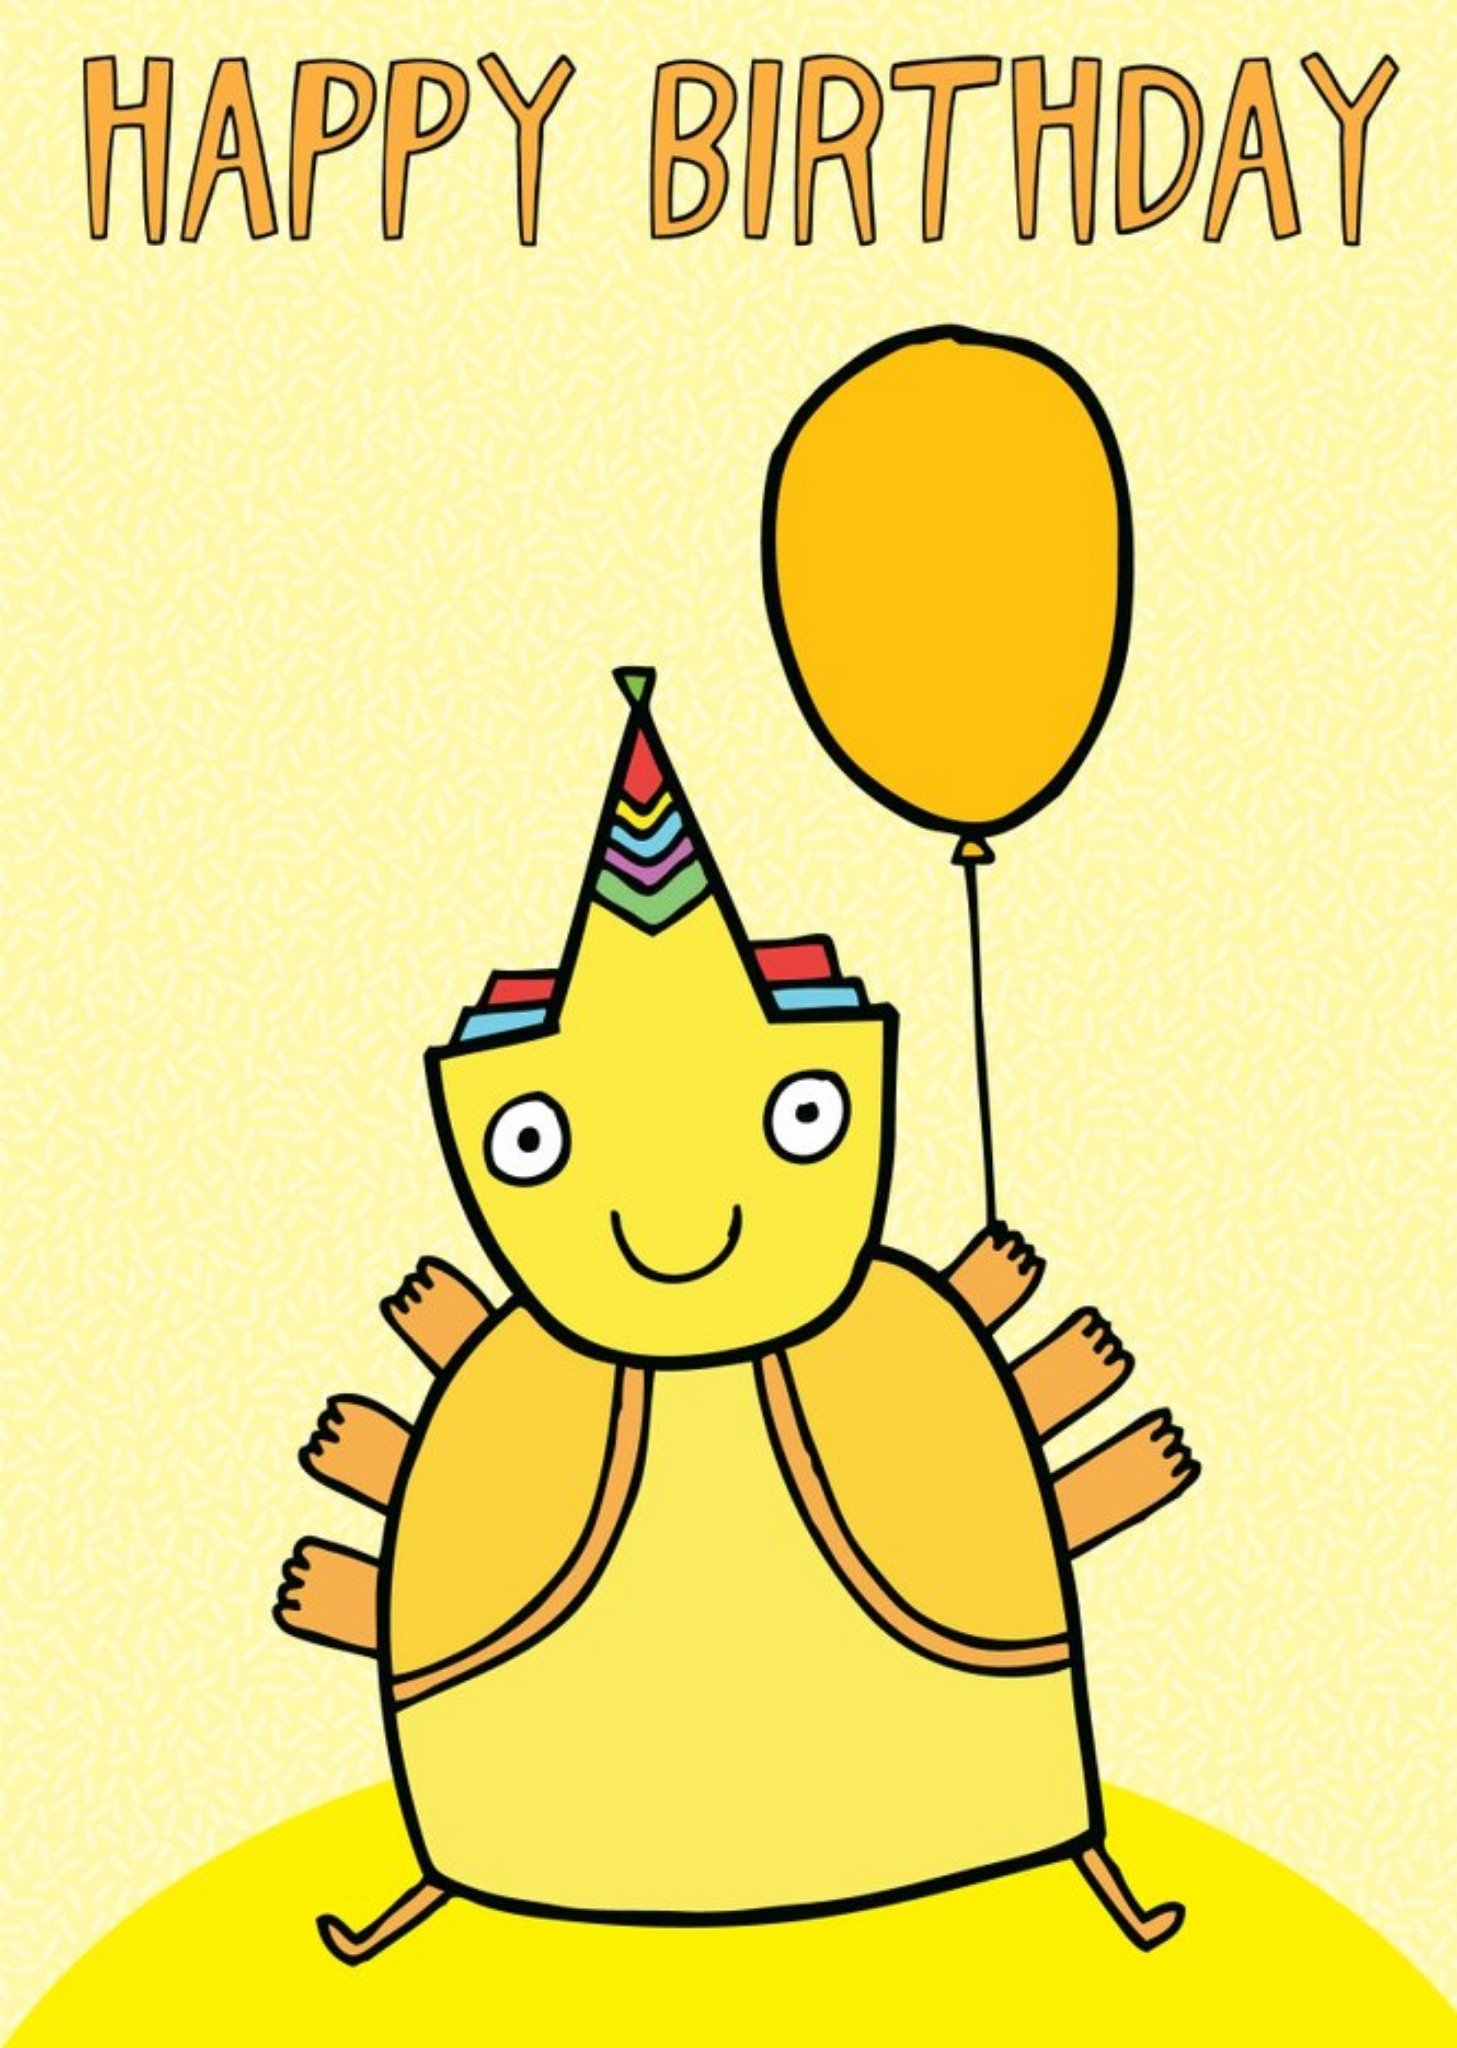 Moonpig Fun Illustration Of An Alien Happy Birthday Card Ecard